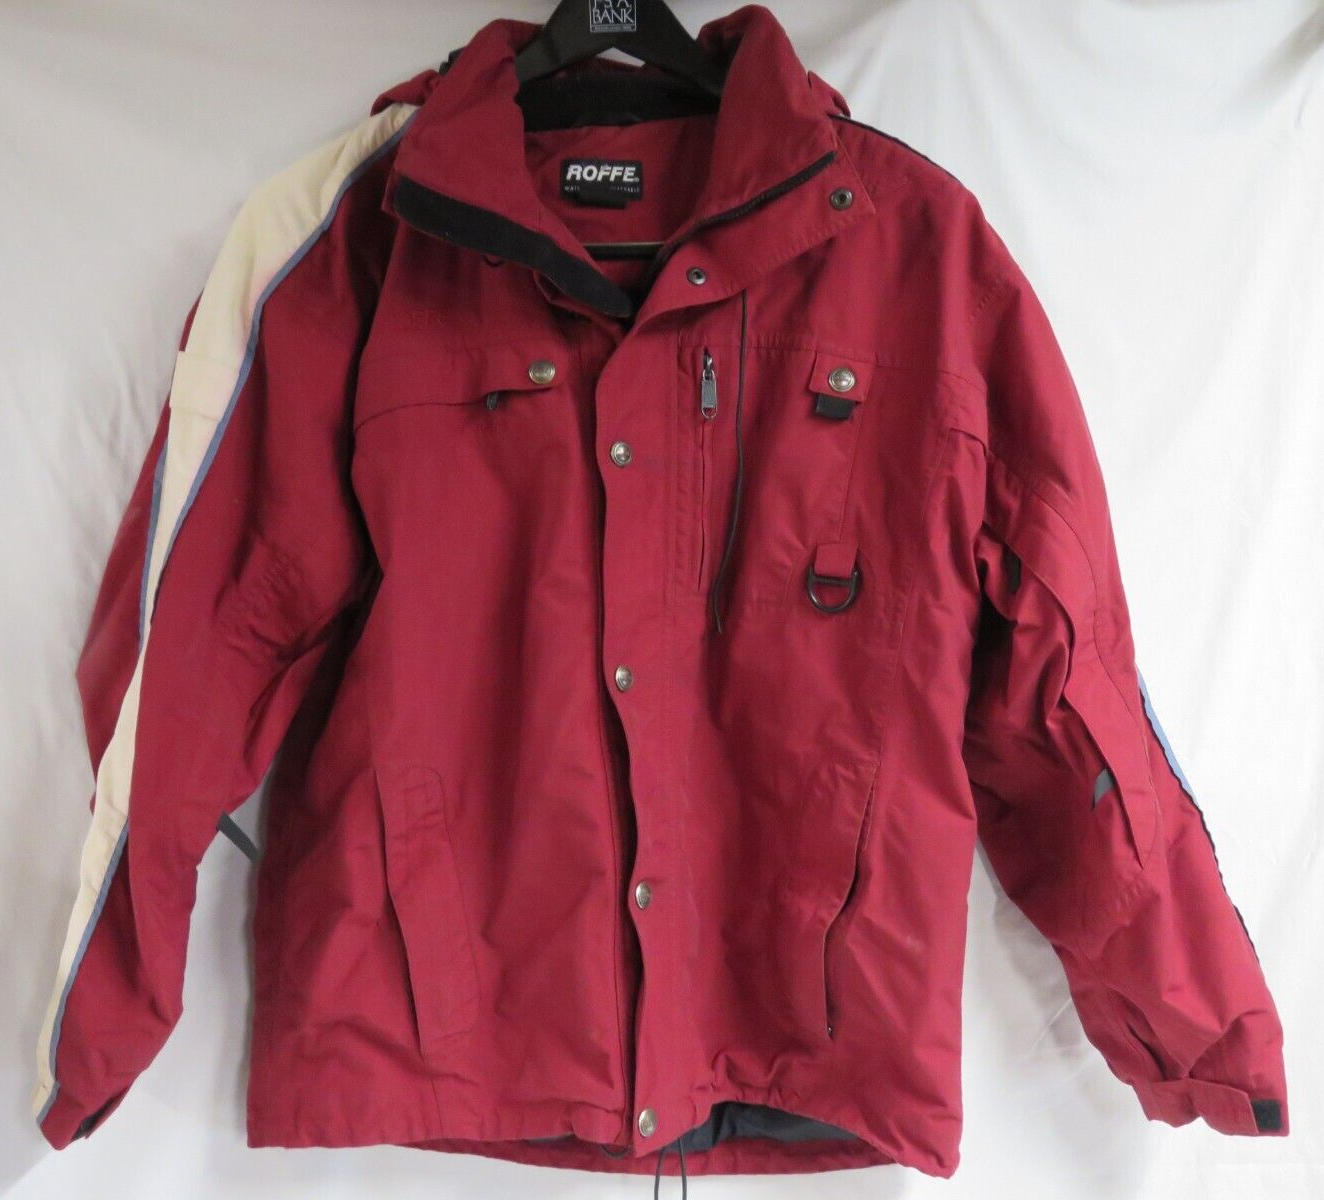 Roffe Waterproof Ski Jacket Men's Large Red White Winter Coat - $19.75